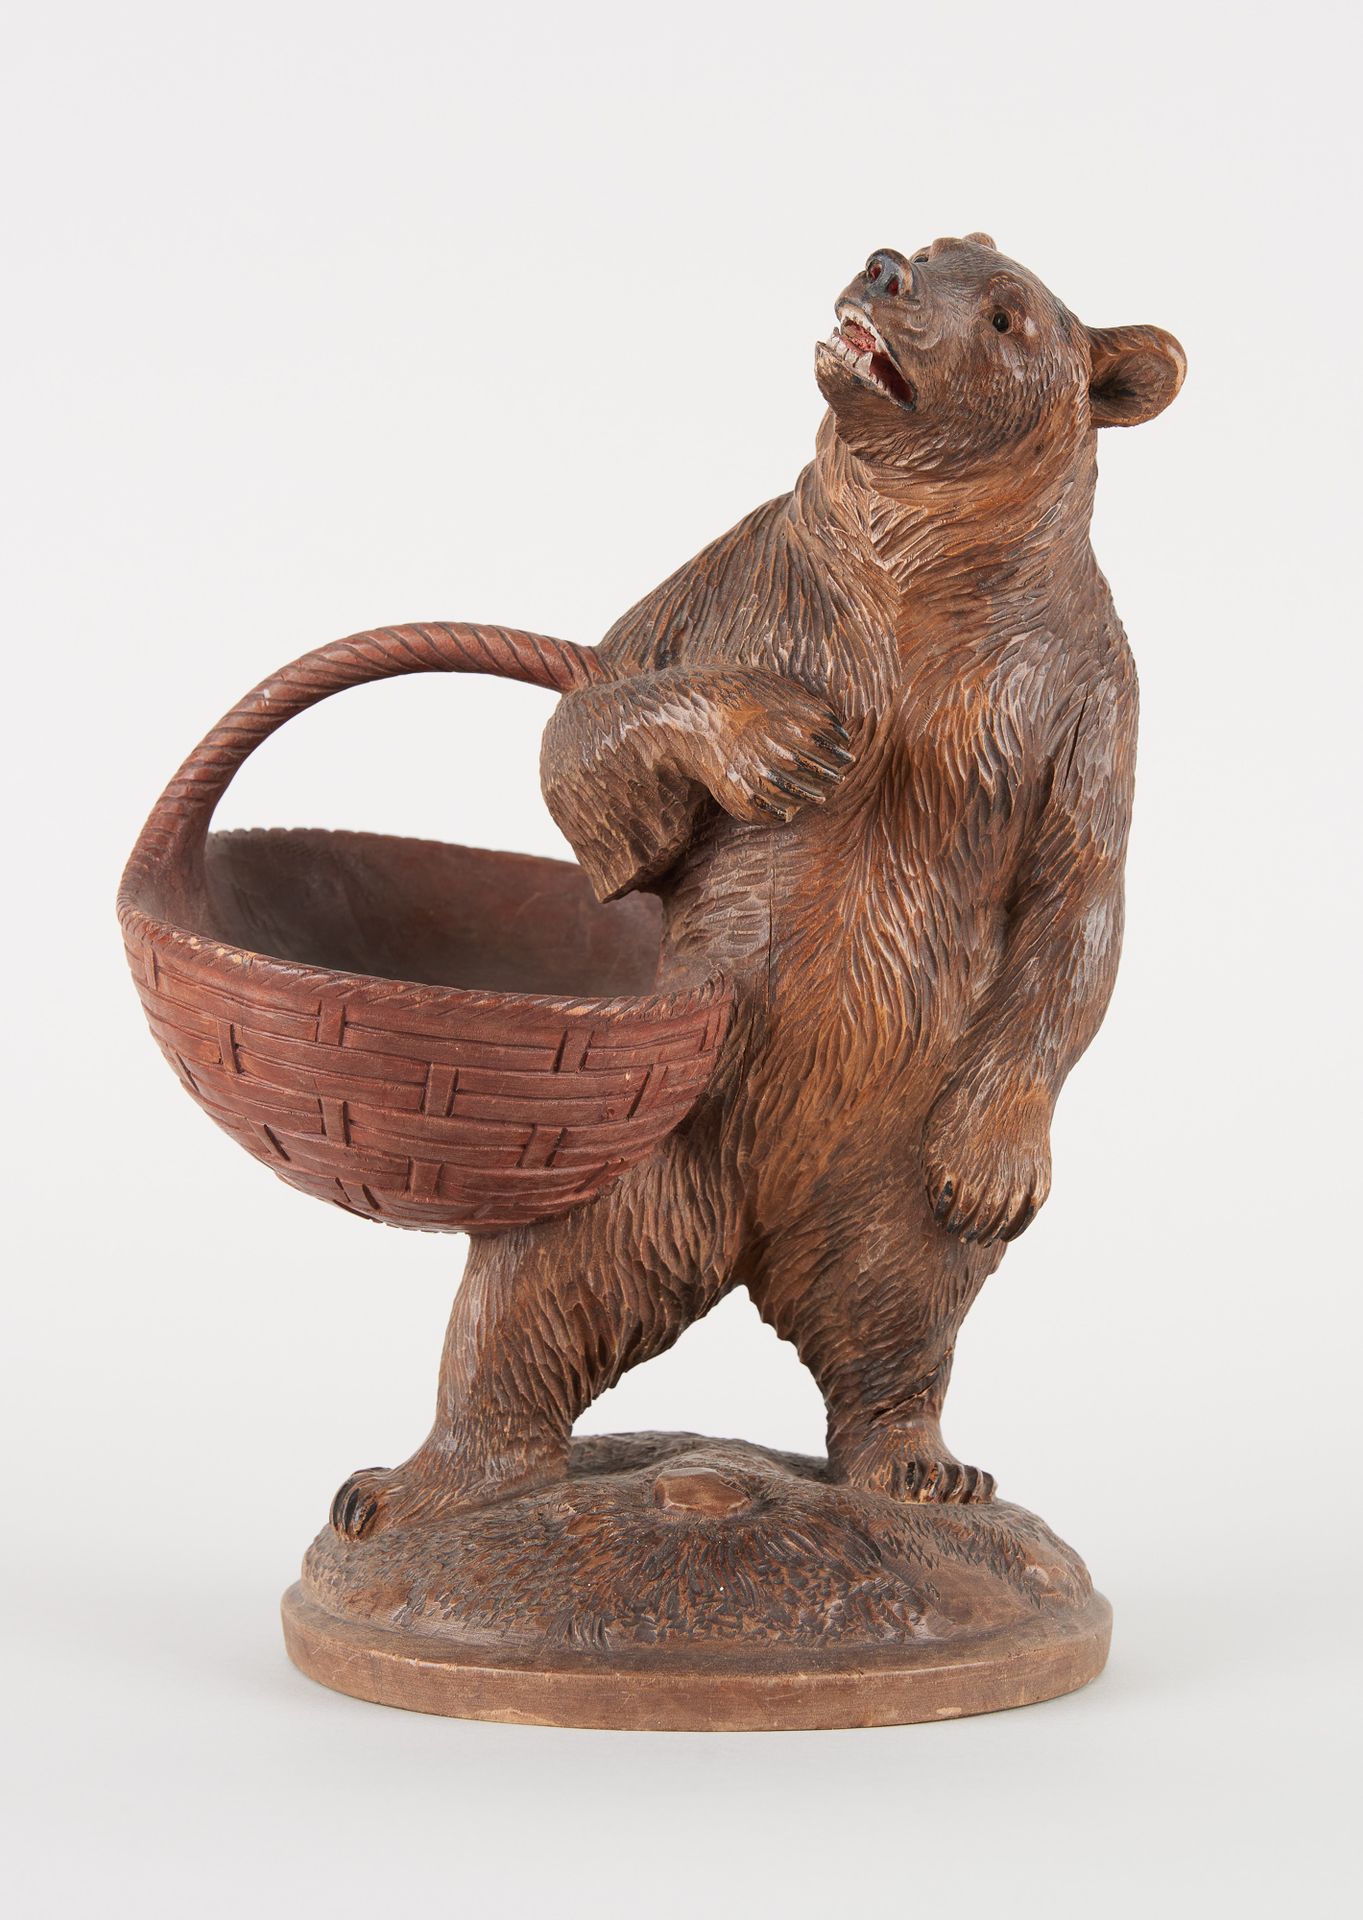 Travail de la Forêt Noire. Skulptur aus Naturholz: Bär, der einen Korb trägt.

M&hellip;